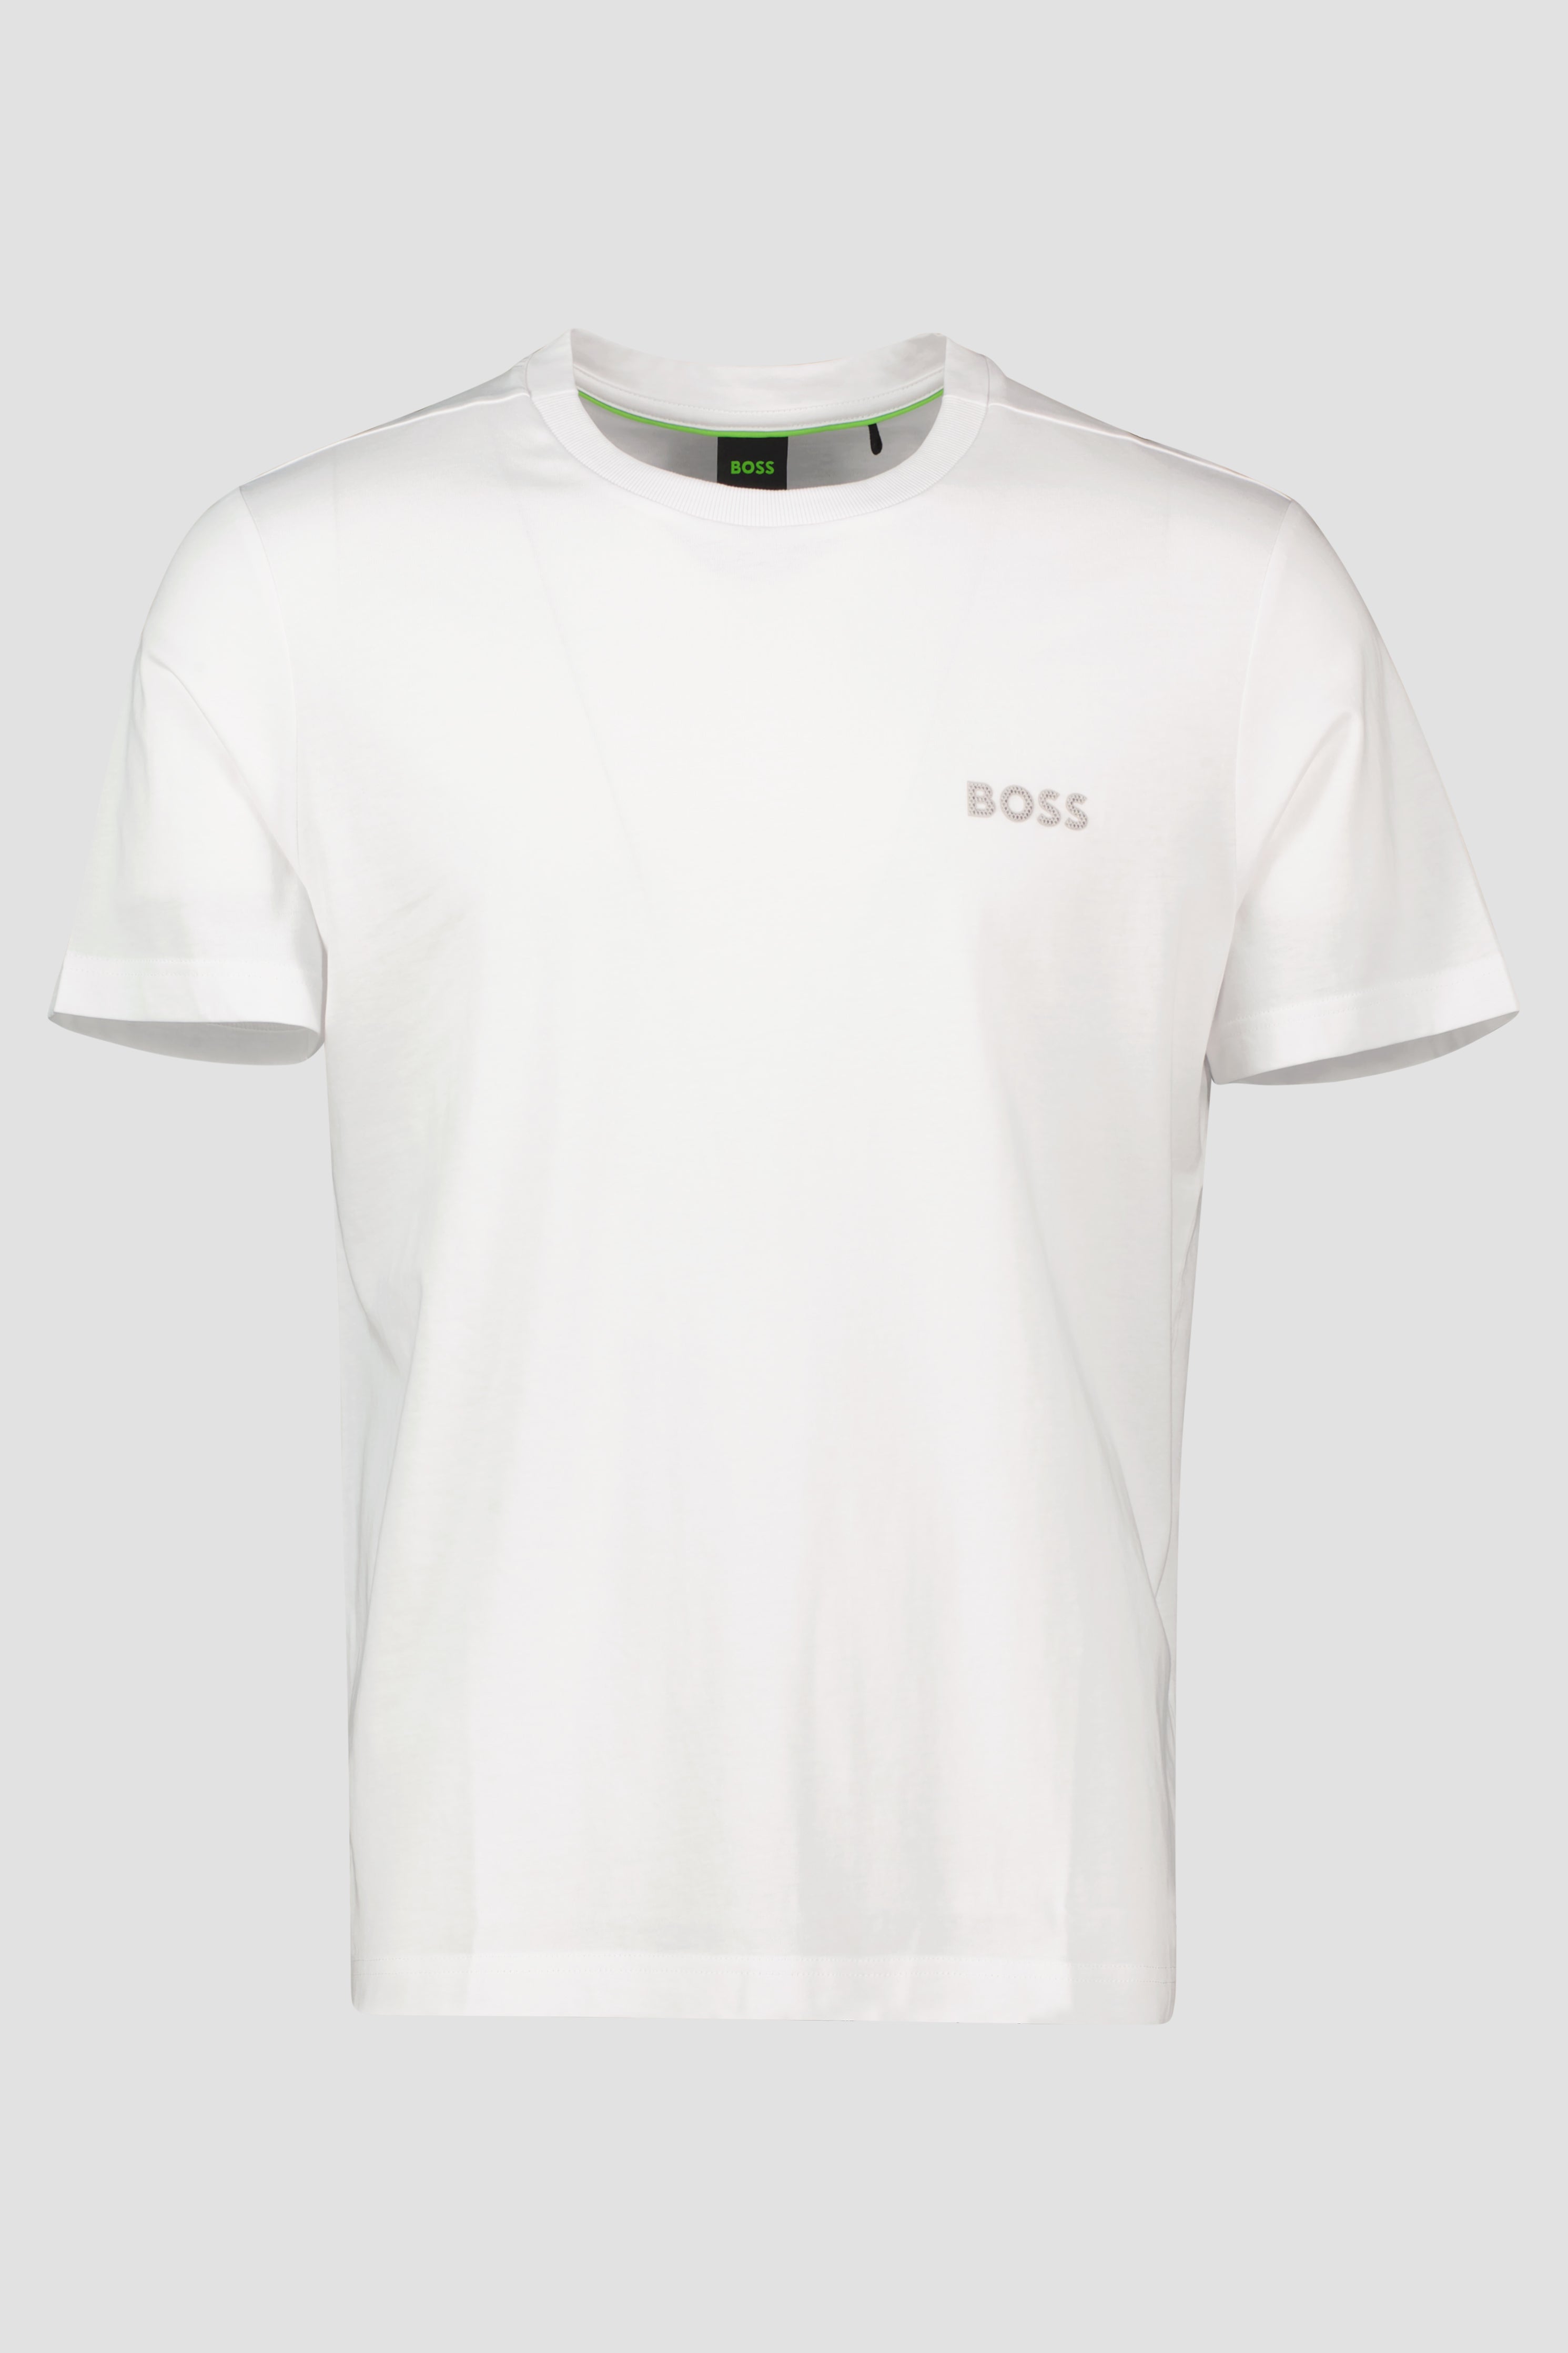 Men's BOSS Green Tee 12 White T Shirt